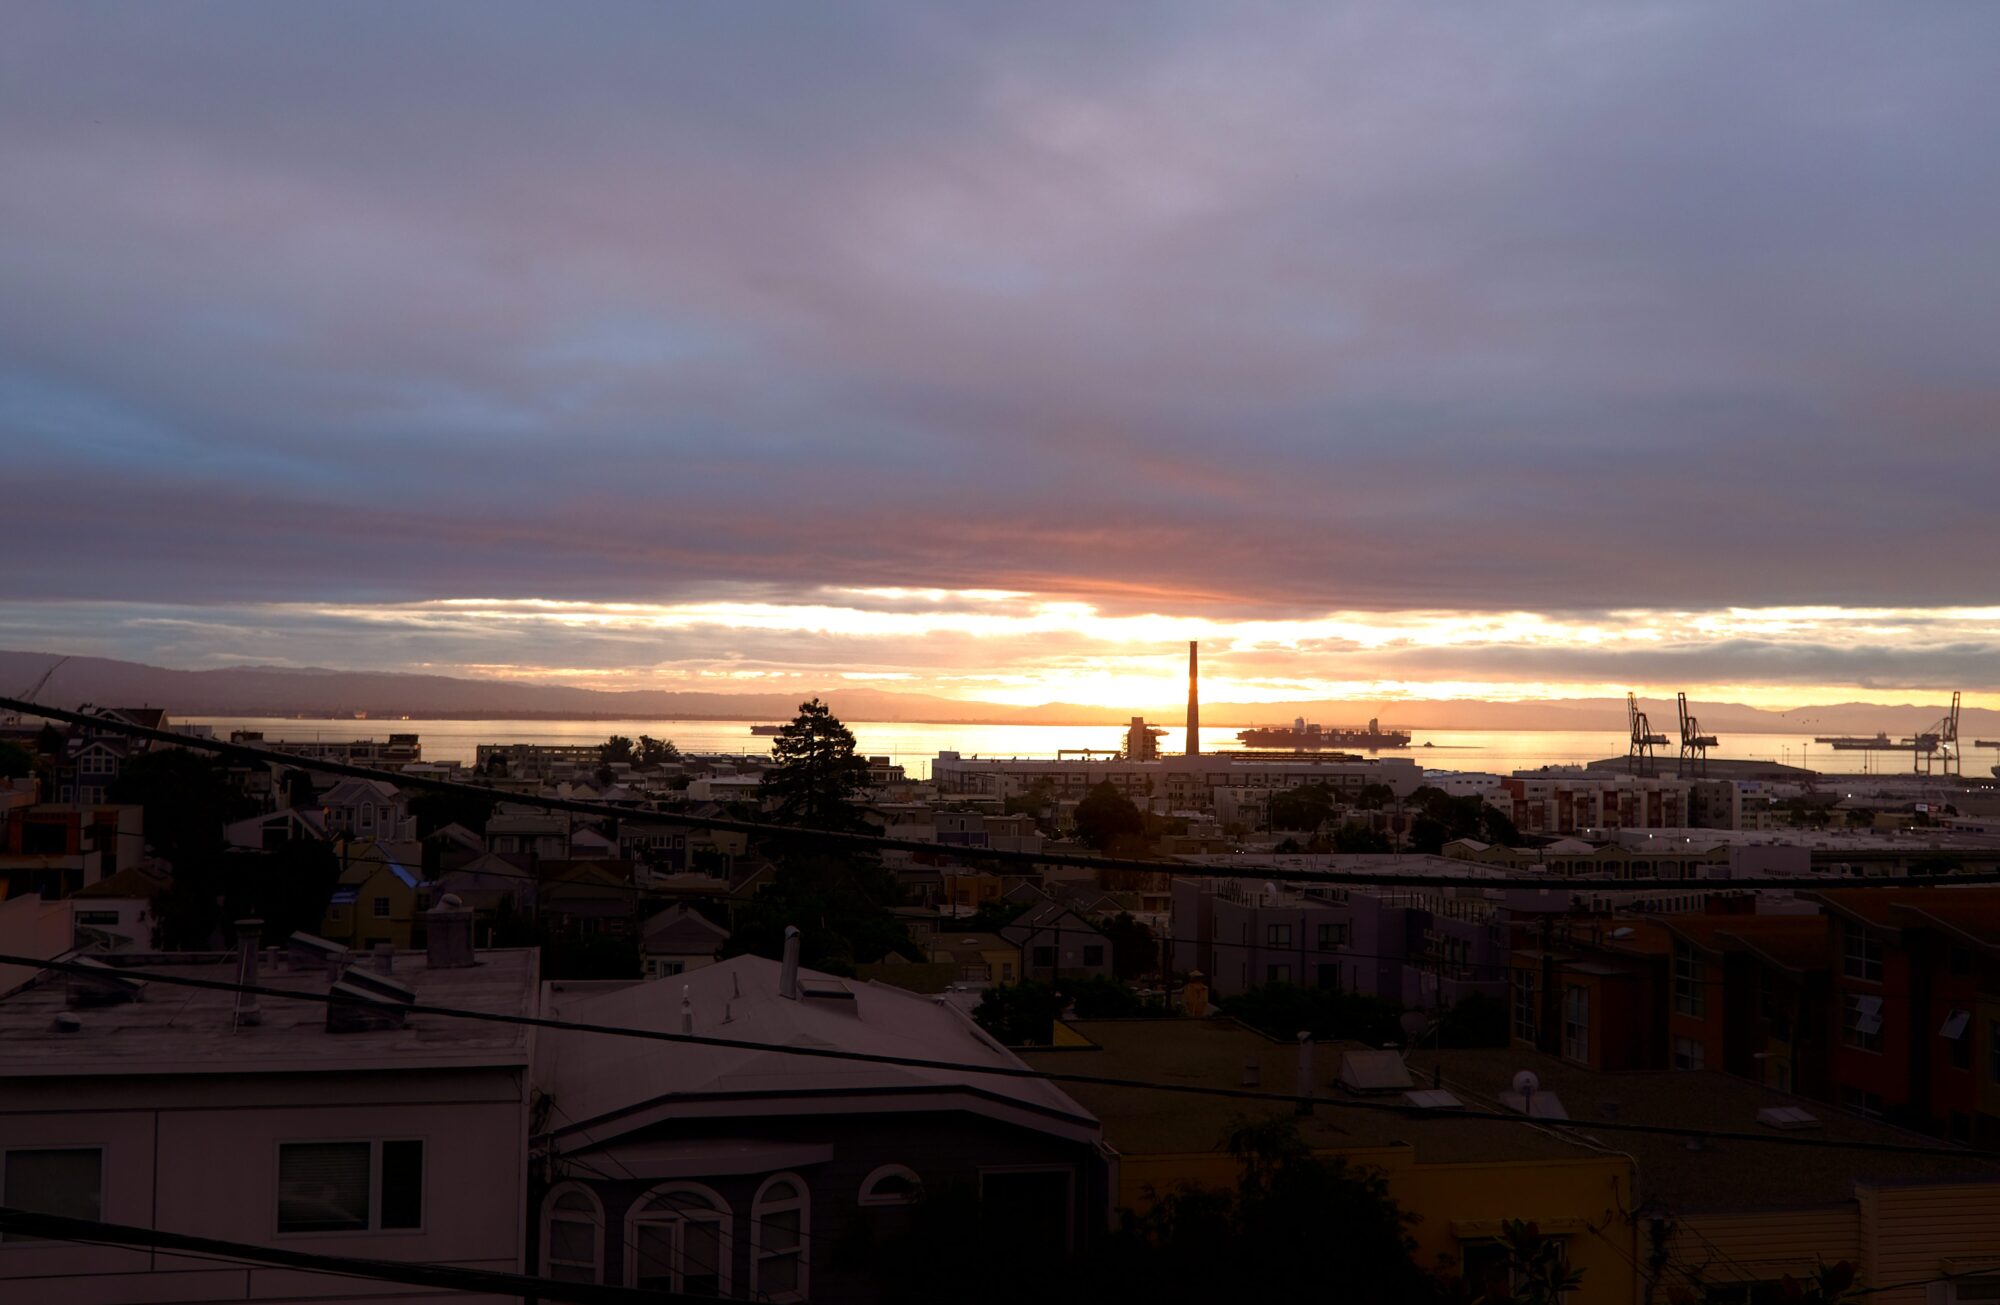 The sun rises over San Francisco